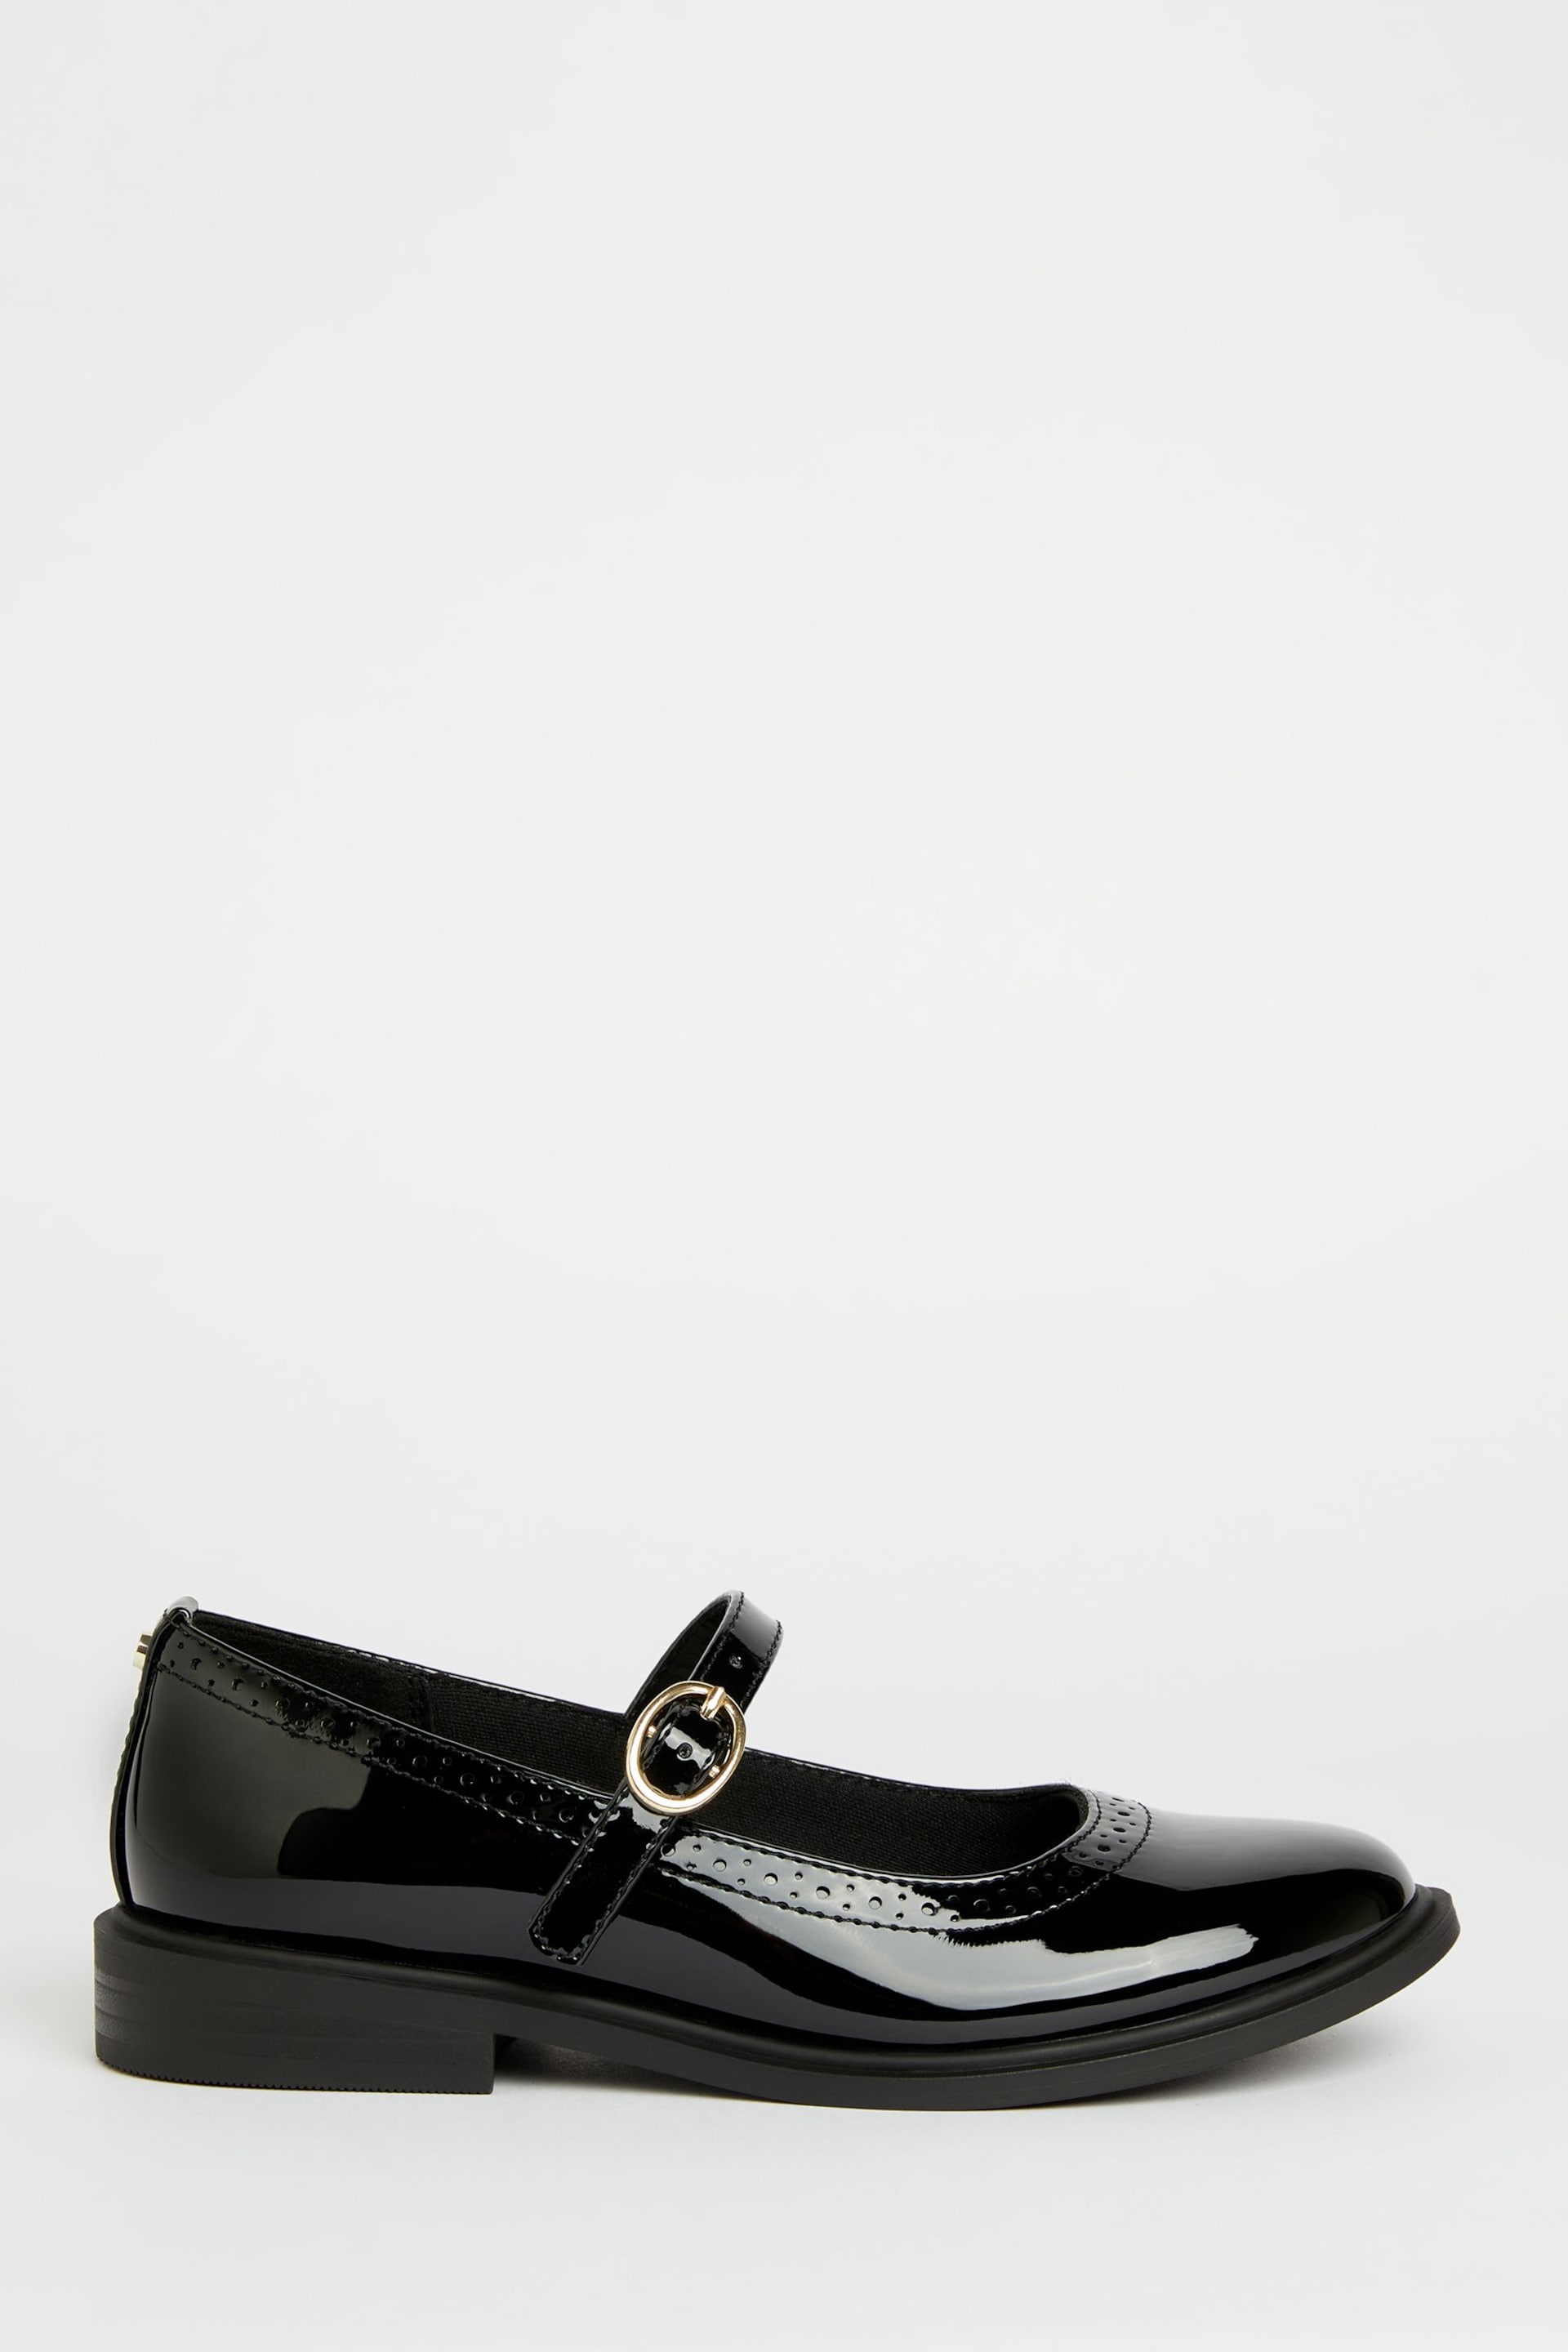 Lipsy Black Flat Dolly Shoe - Image 1 of 1